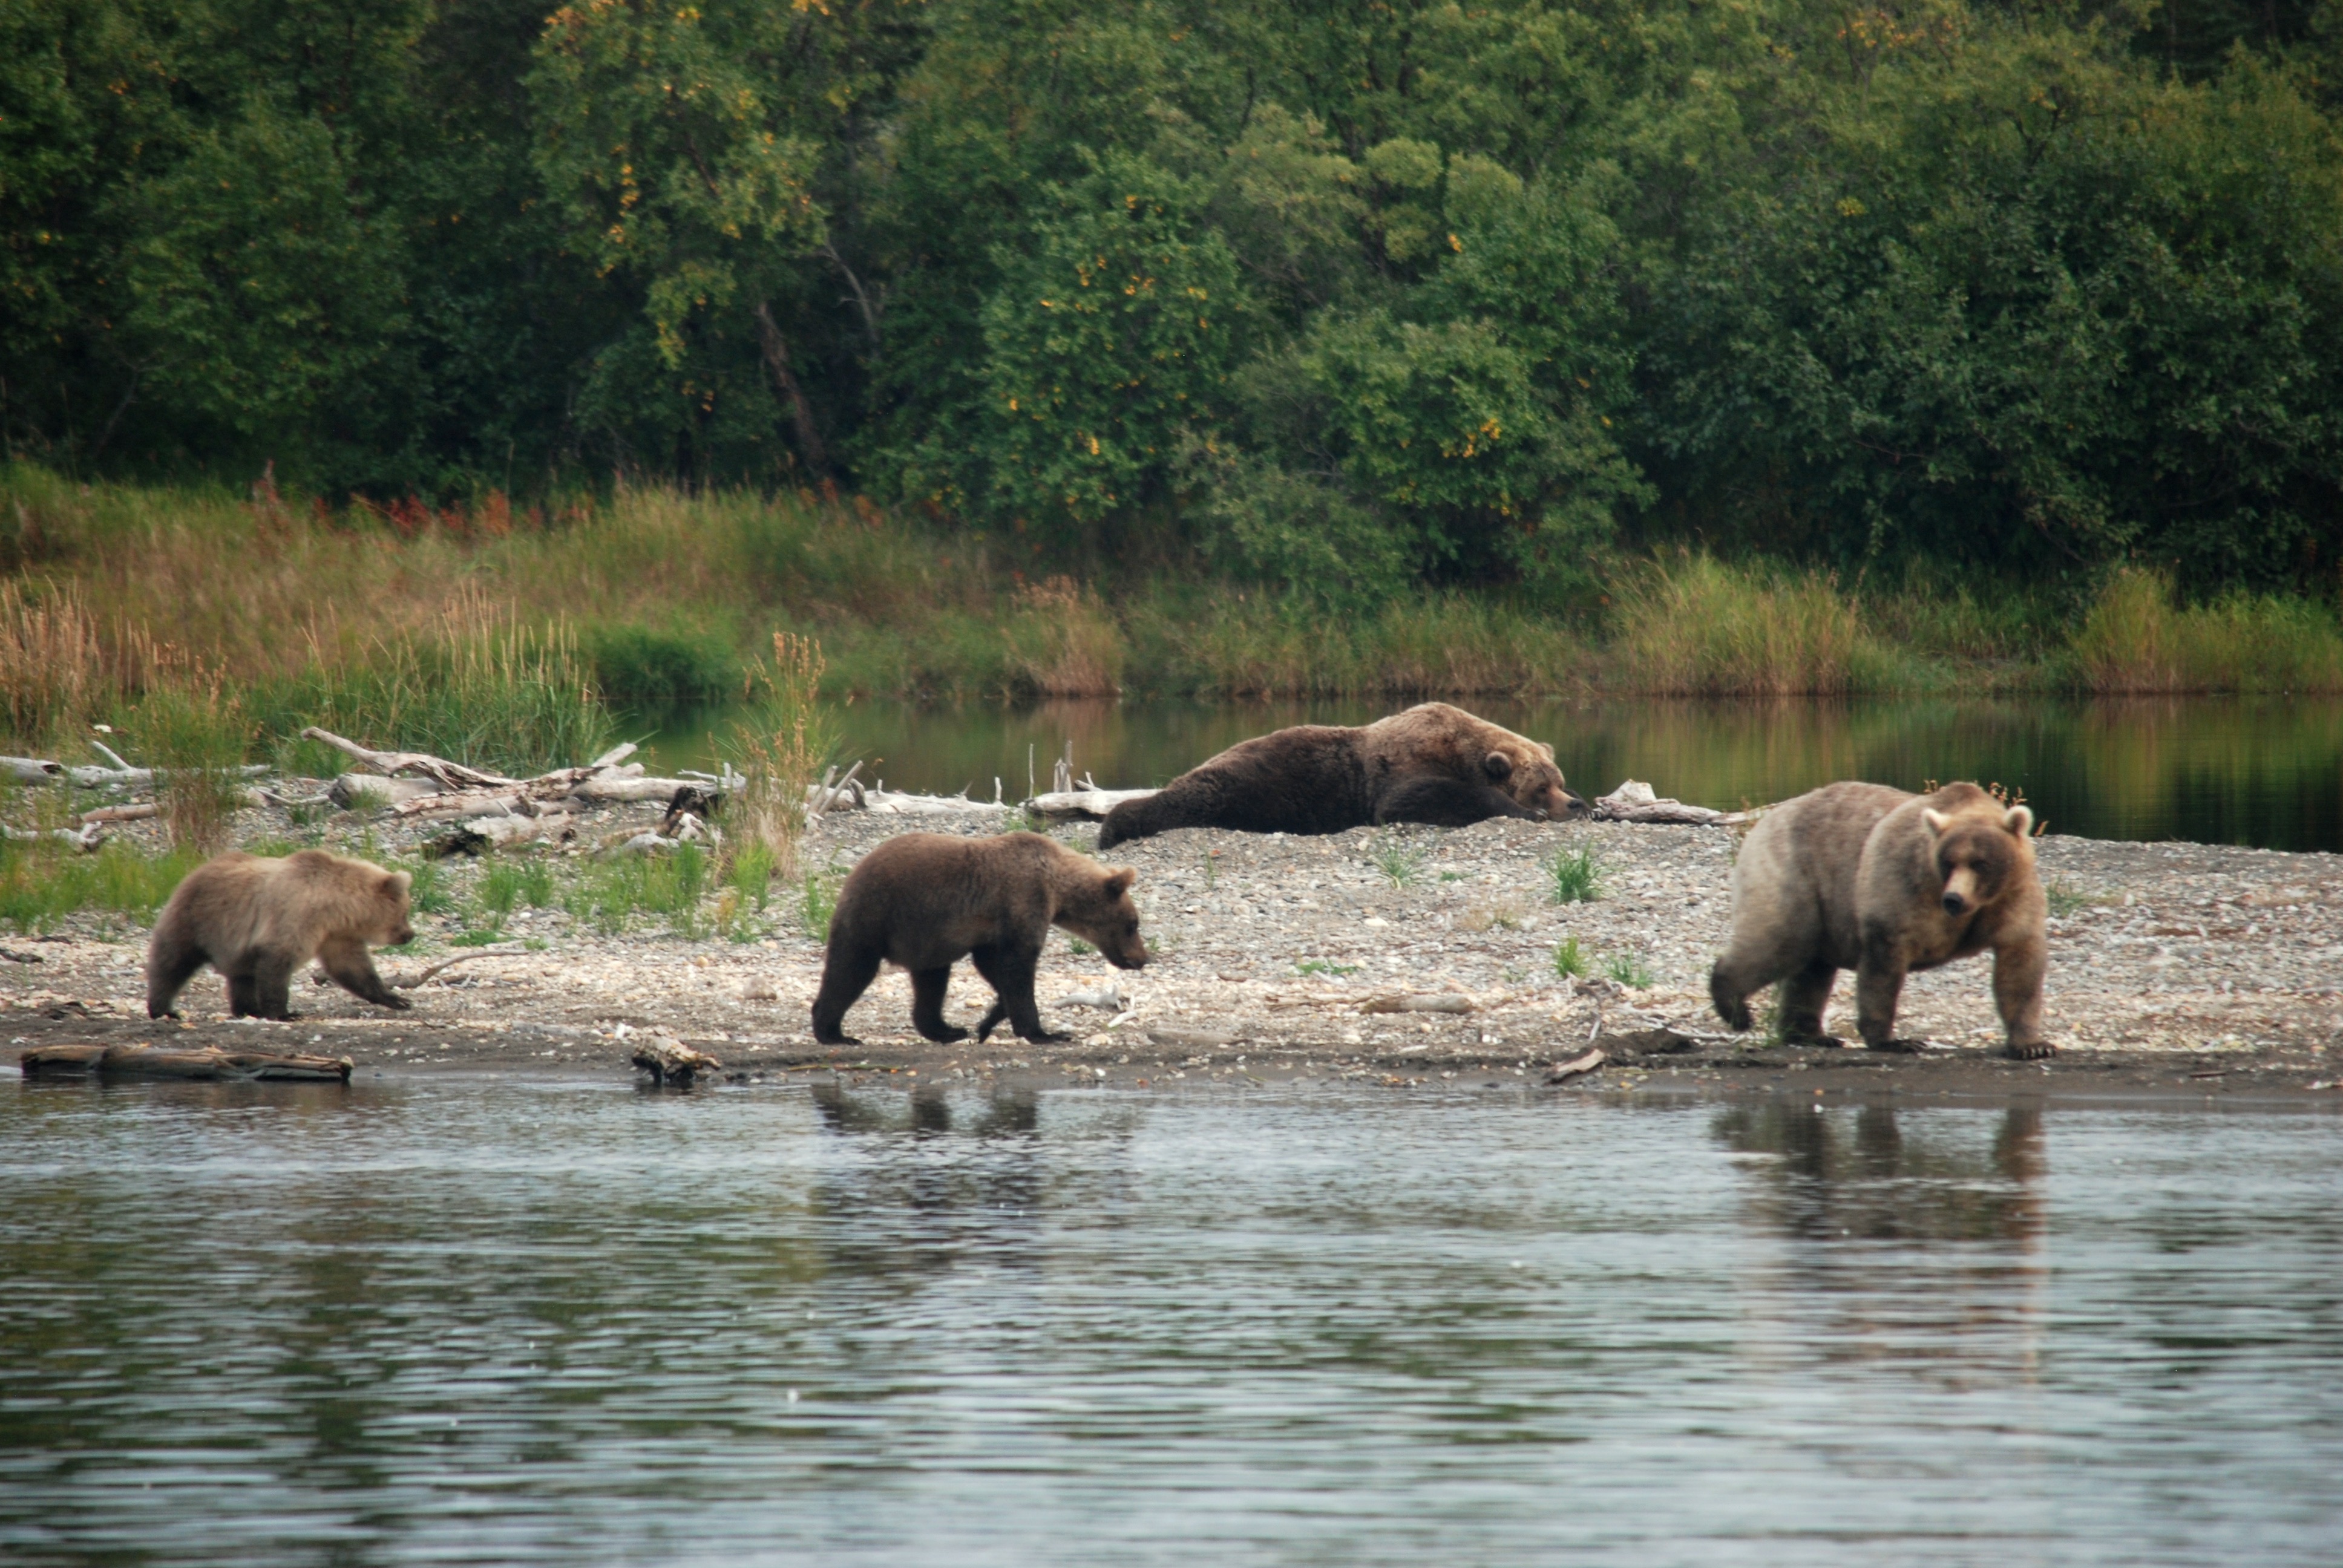 Three bears walk near a sleeping bear